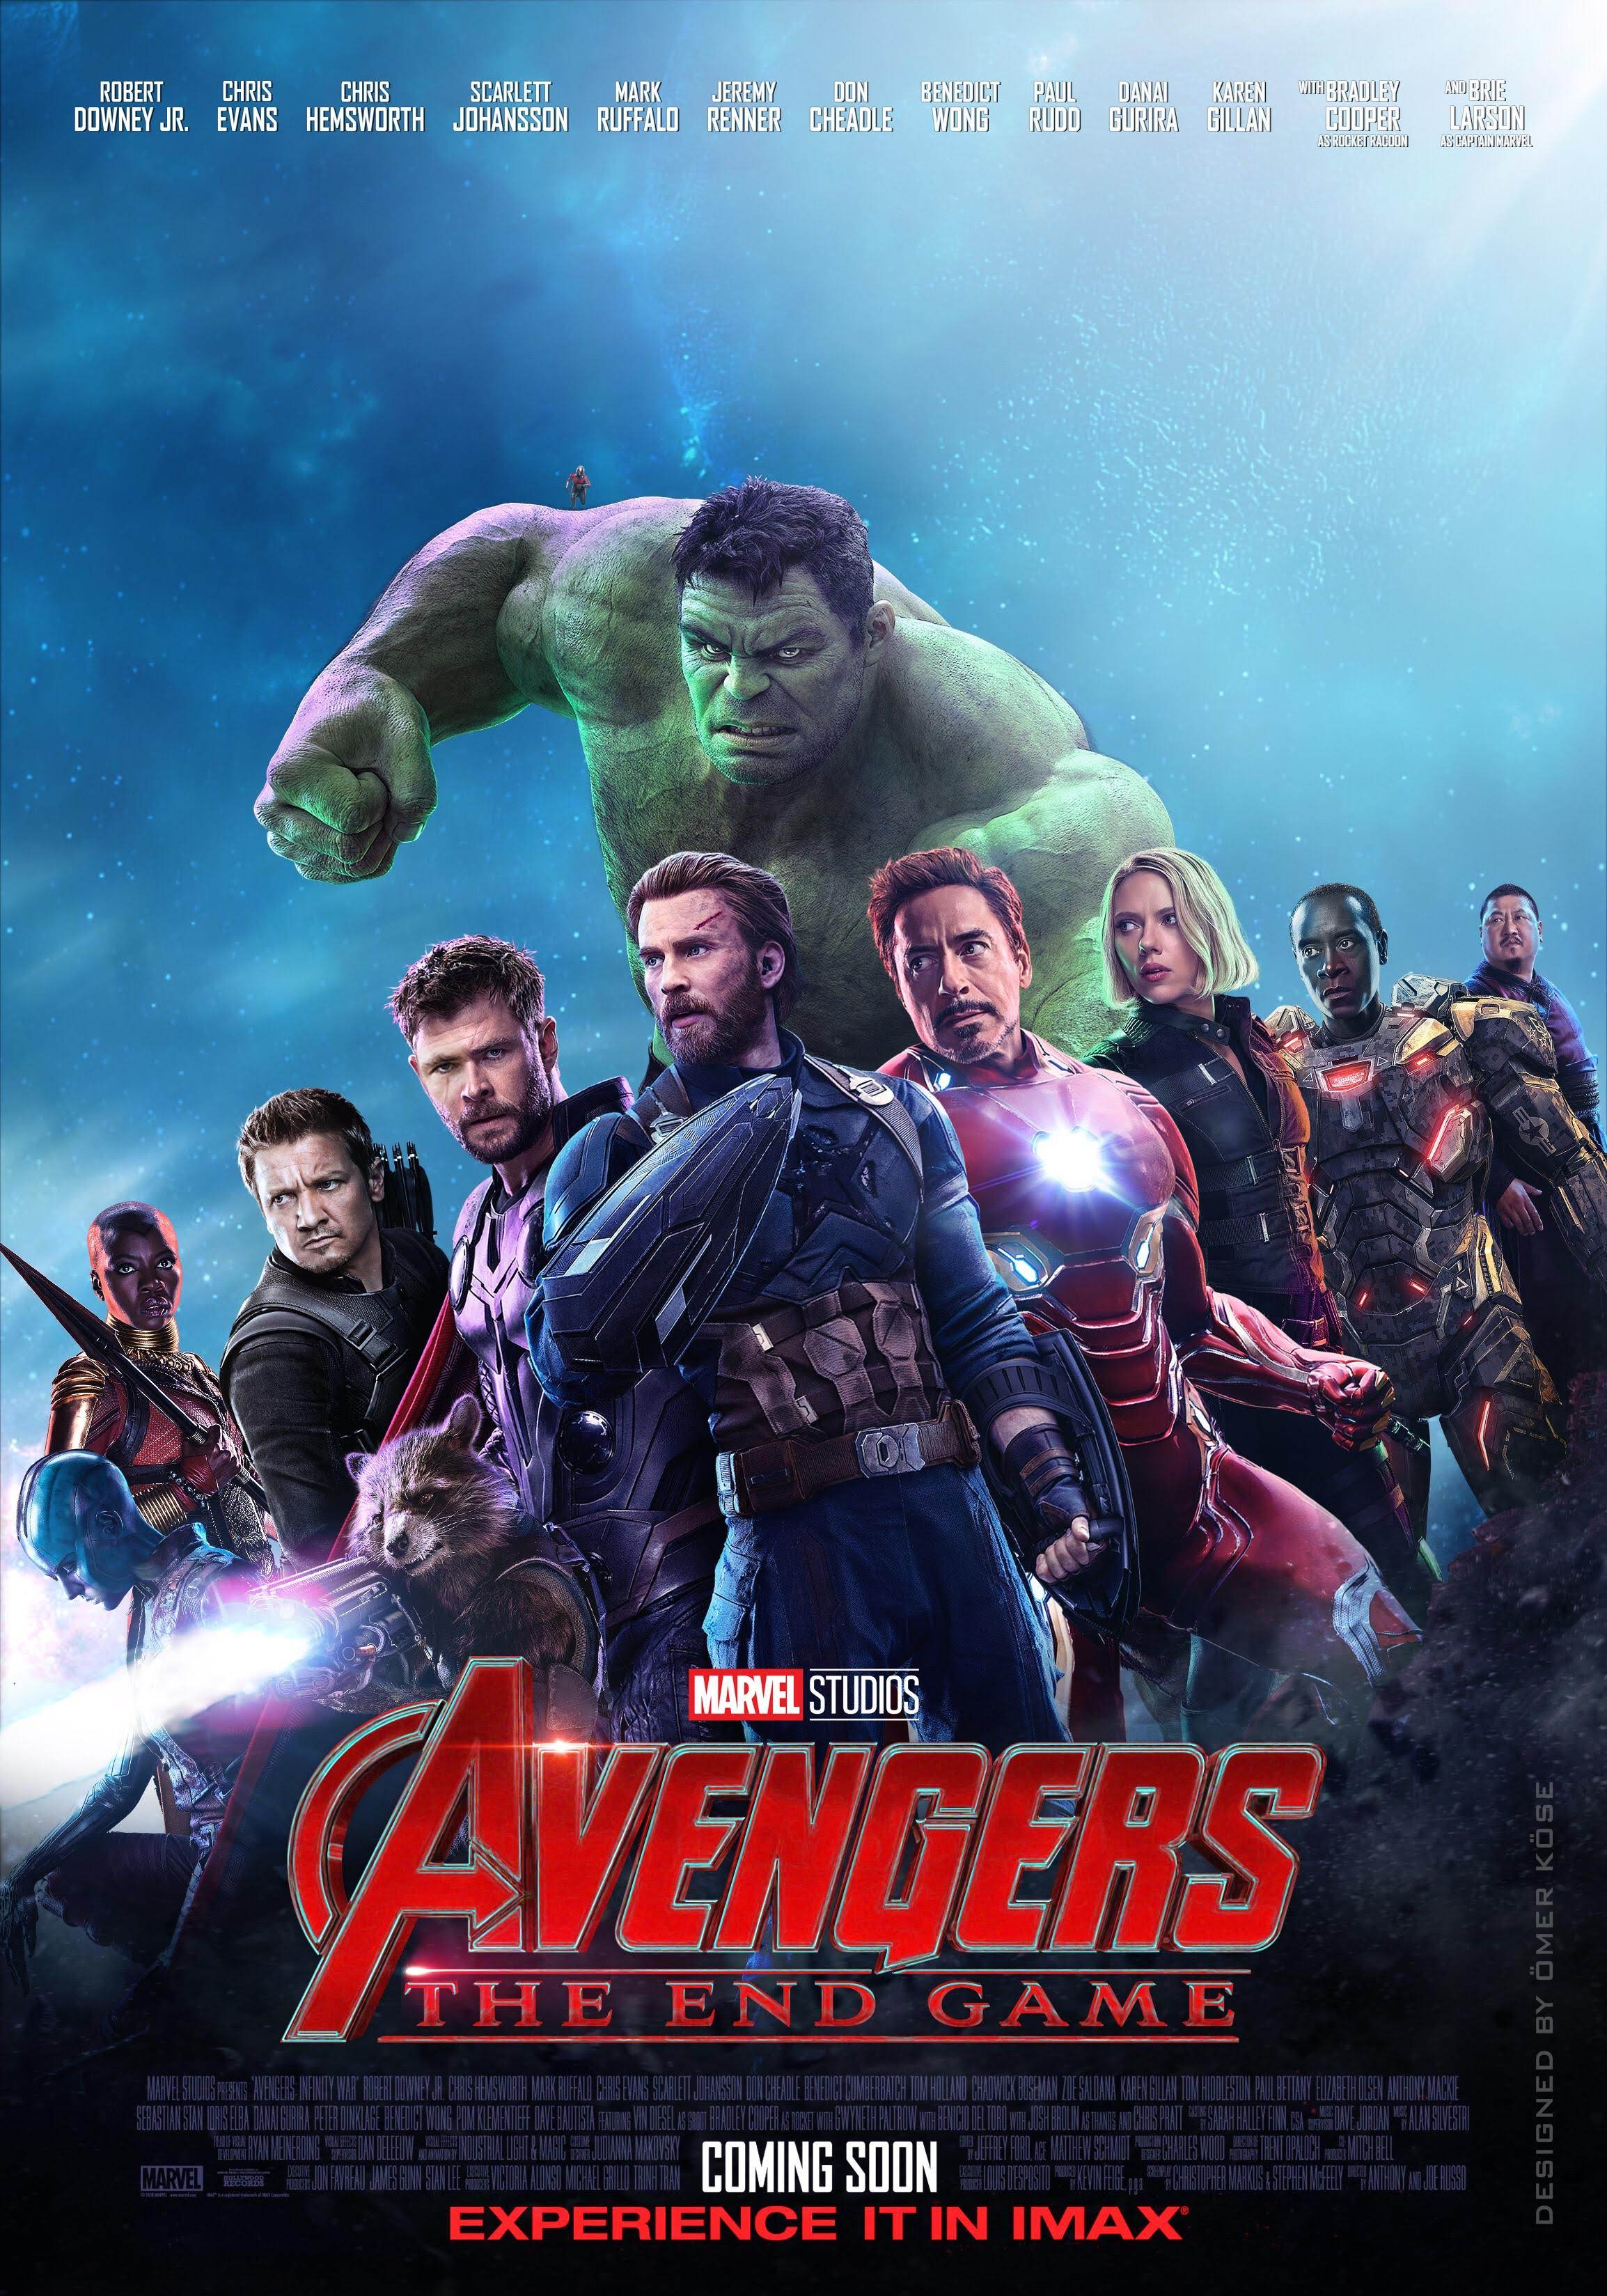 Avengers 4 Poster By Omer Kose マーベルのヒーロー大集合映画のクライマックス アベンジャーズ 4 のちょっと気になるファンメイドのポスター B Side Of Cia